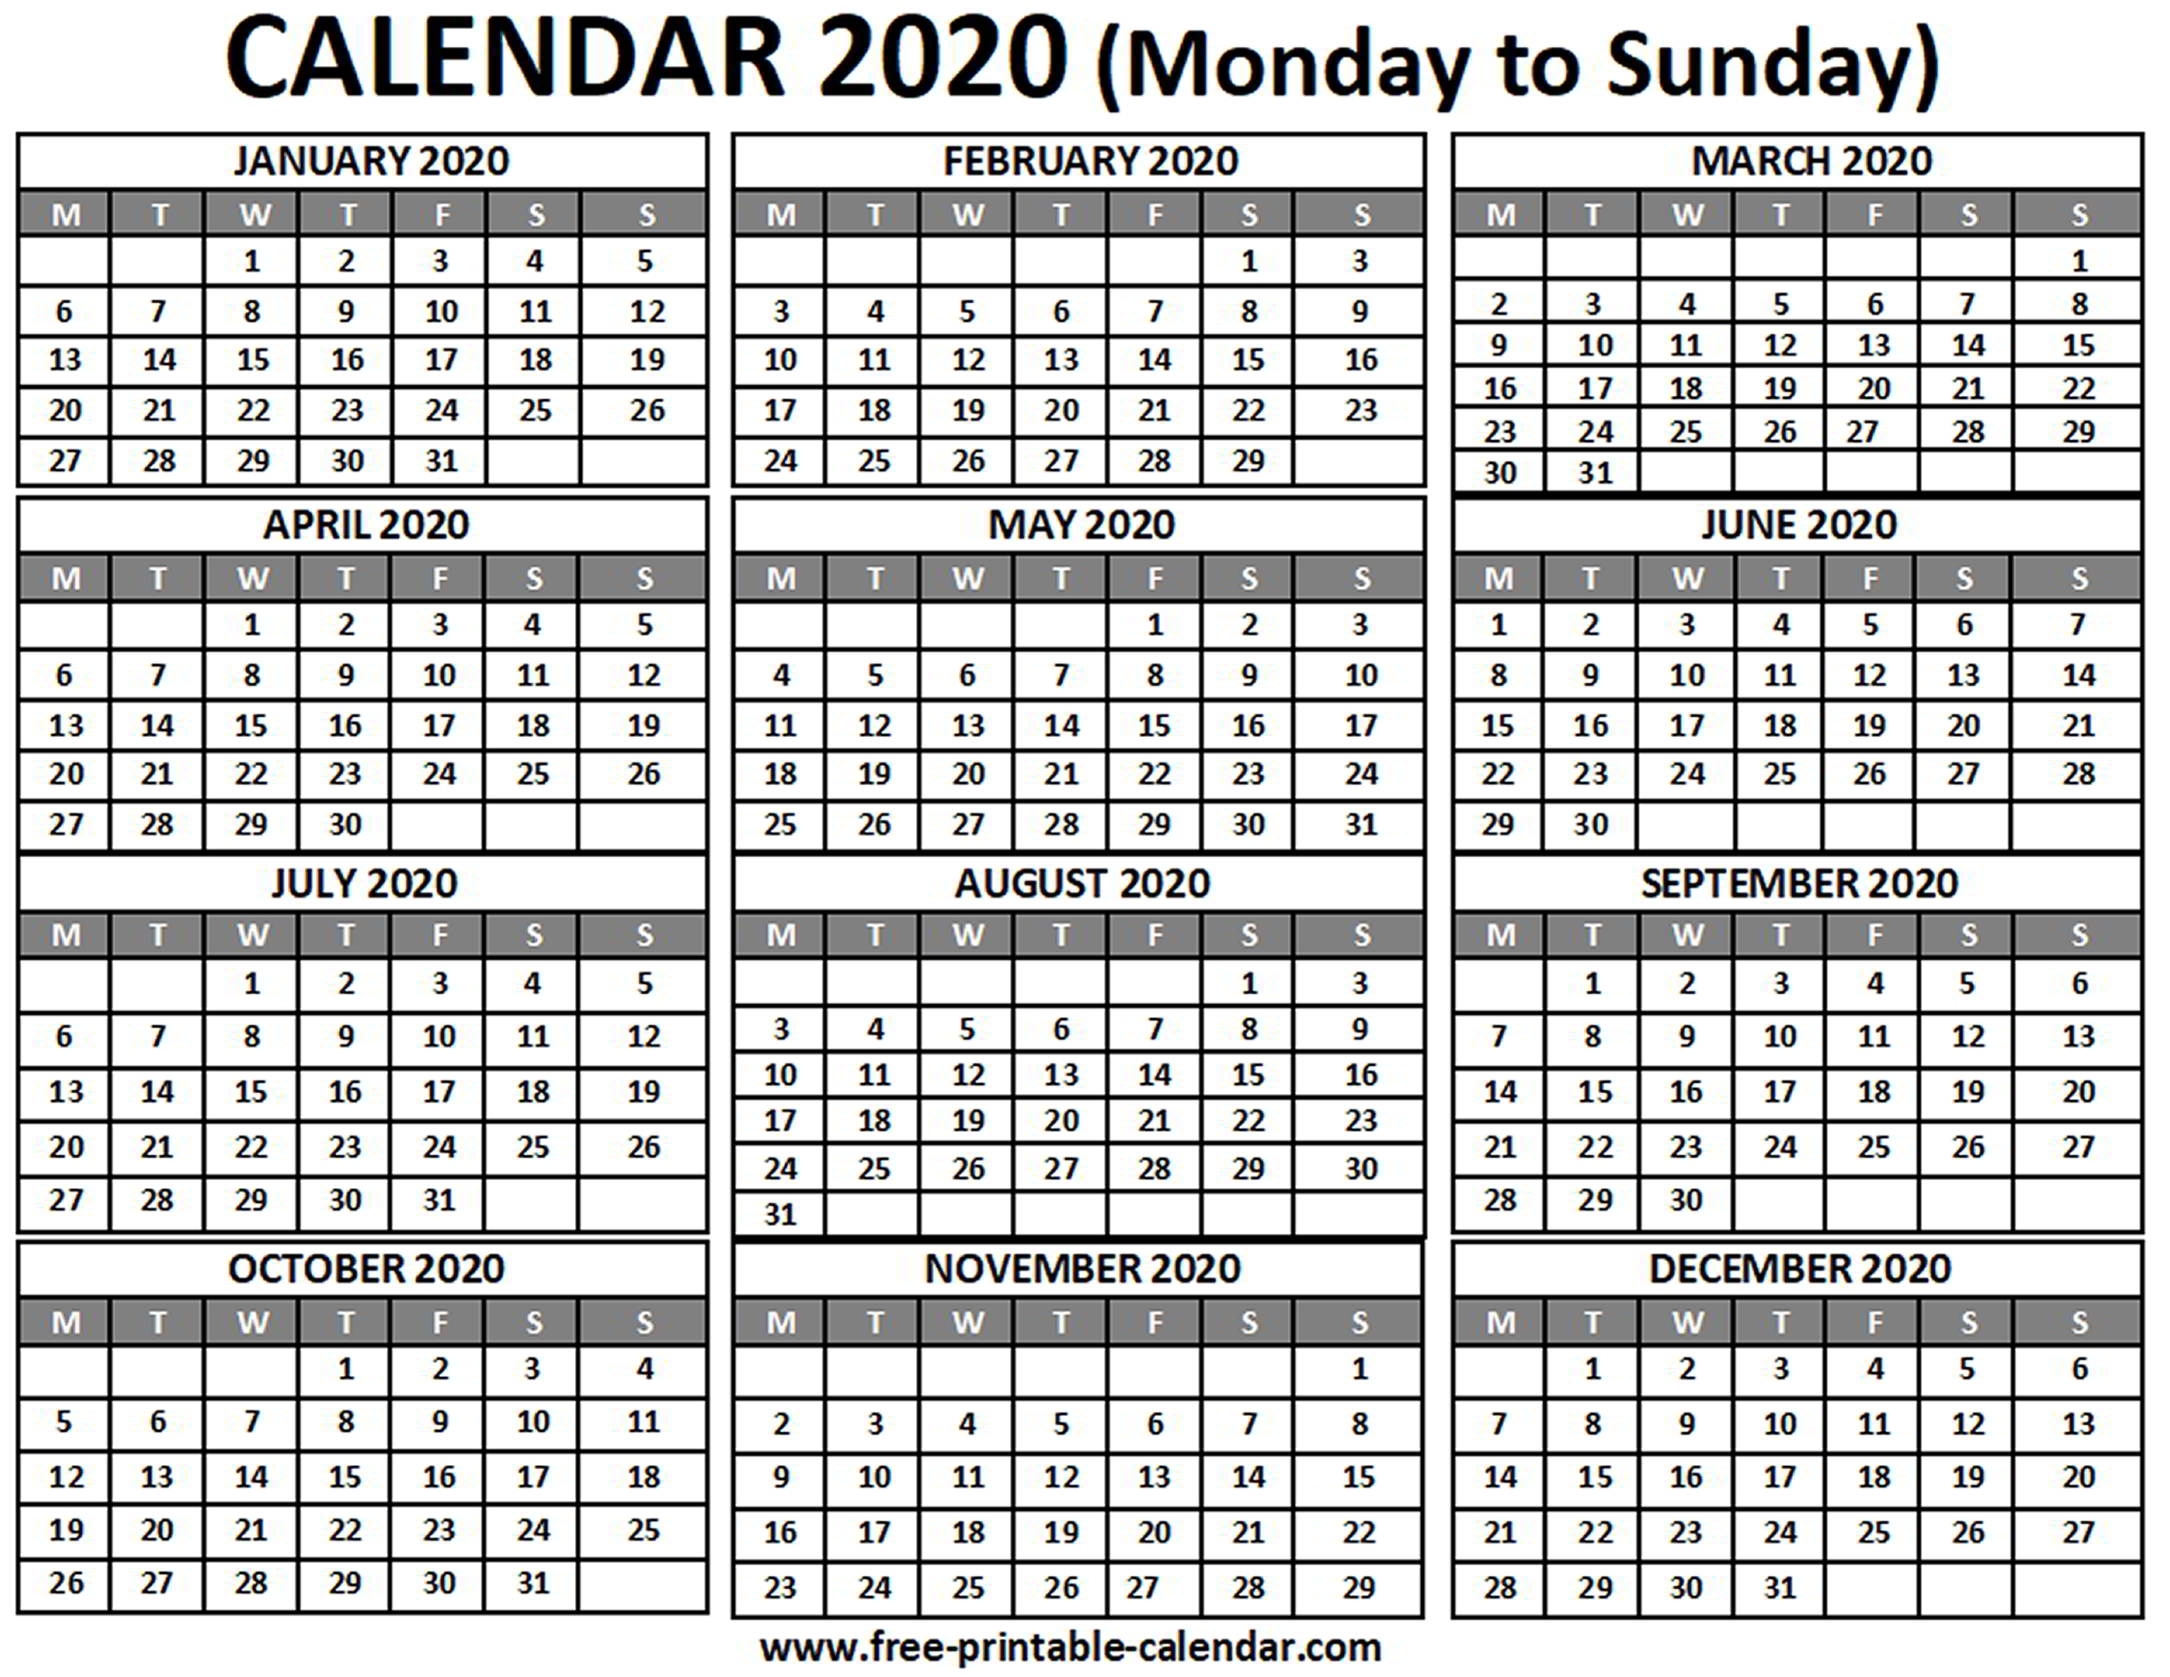 2020 Calendar - Free-Printable-Calendar Free Yearly Calendar Start On Monday